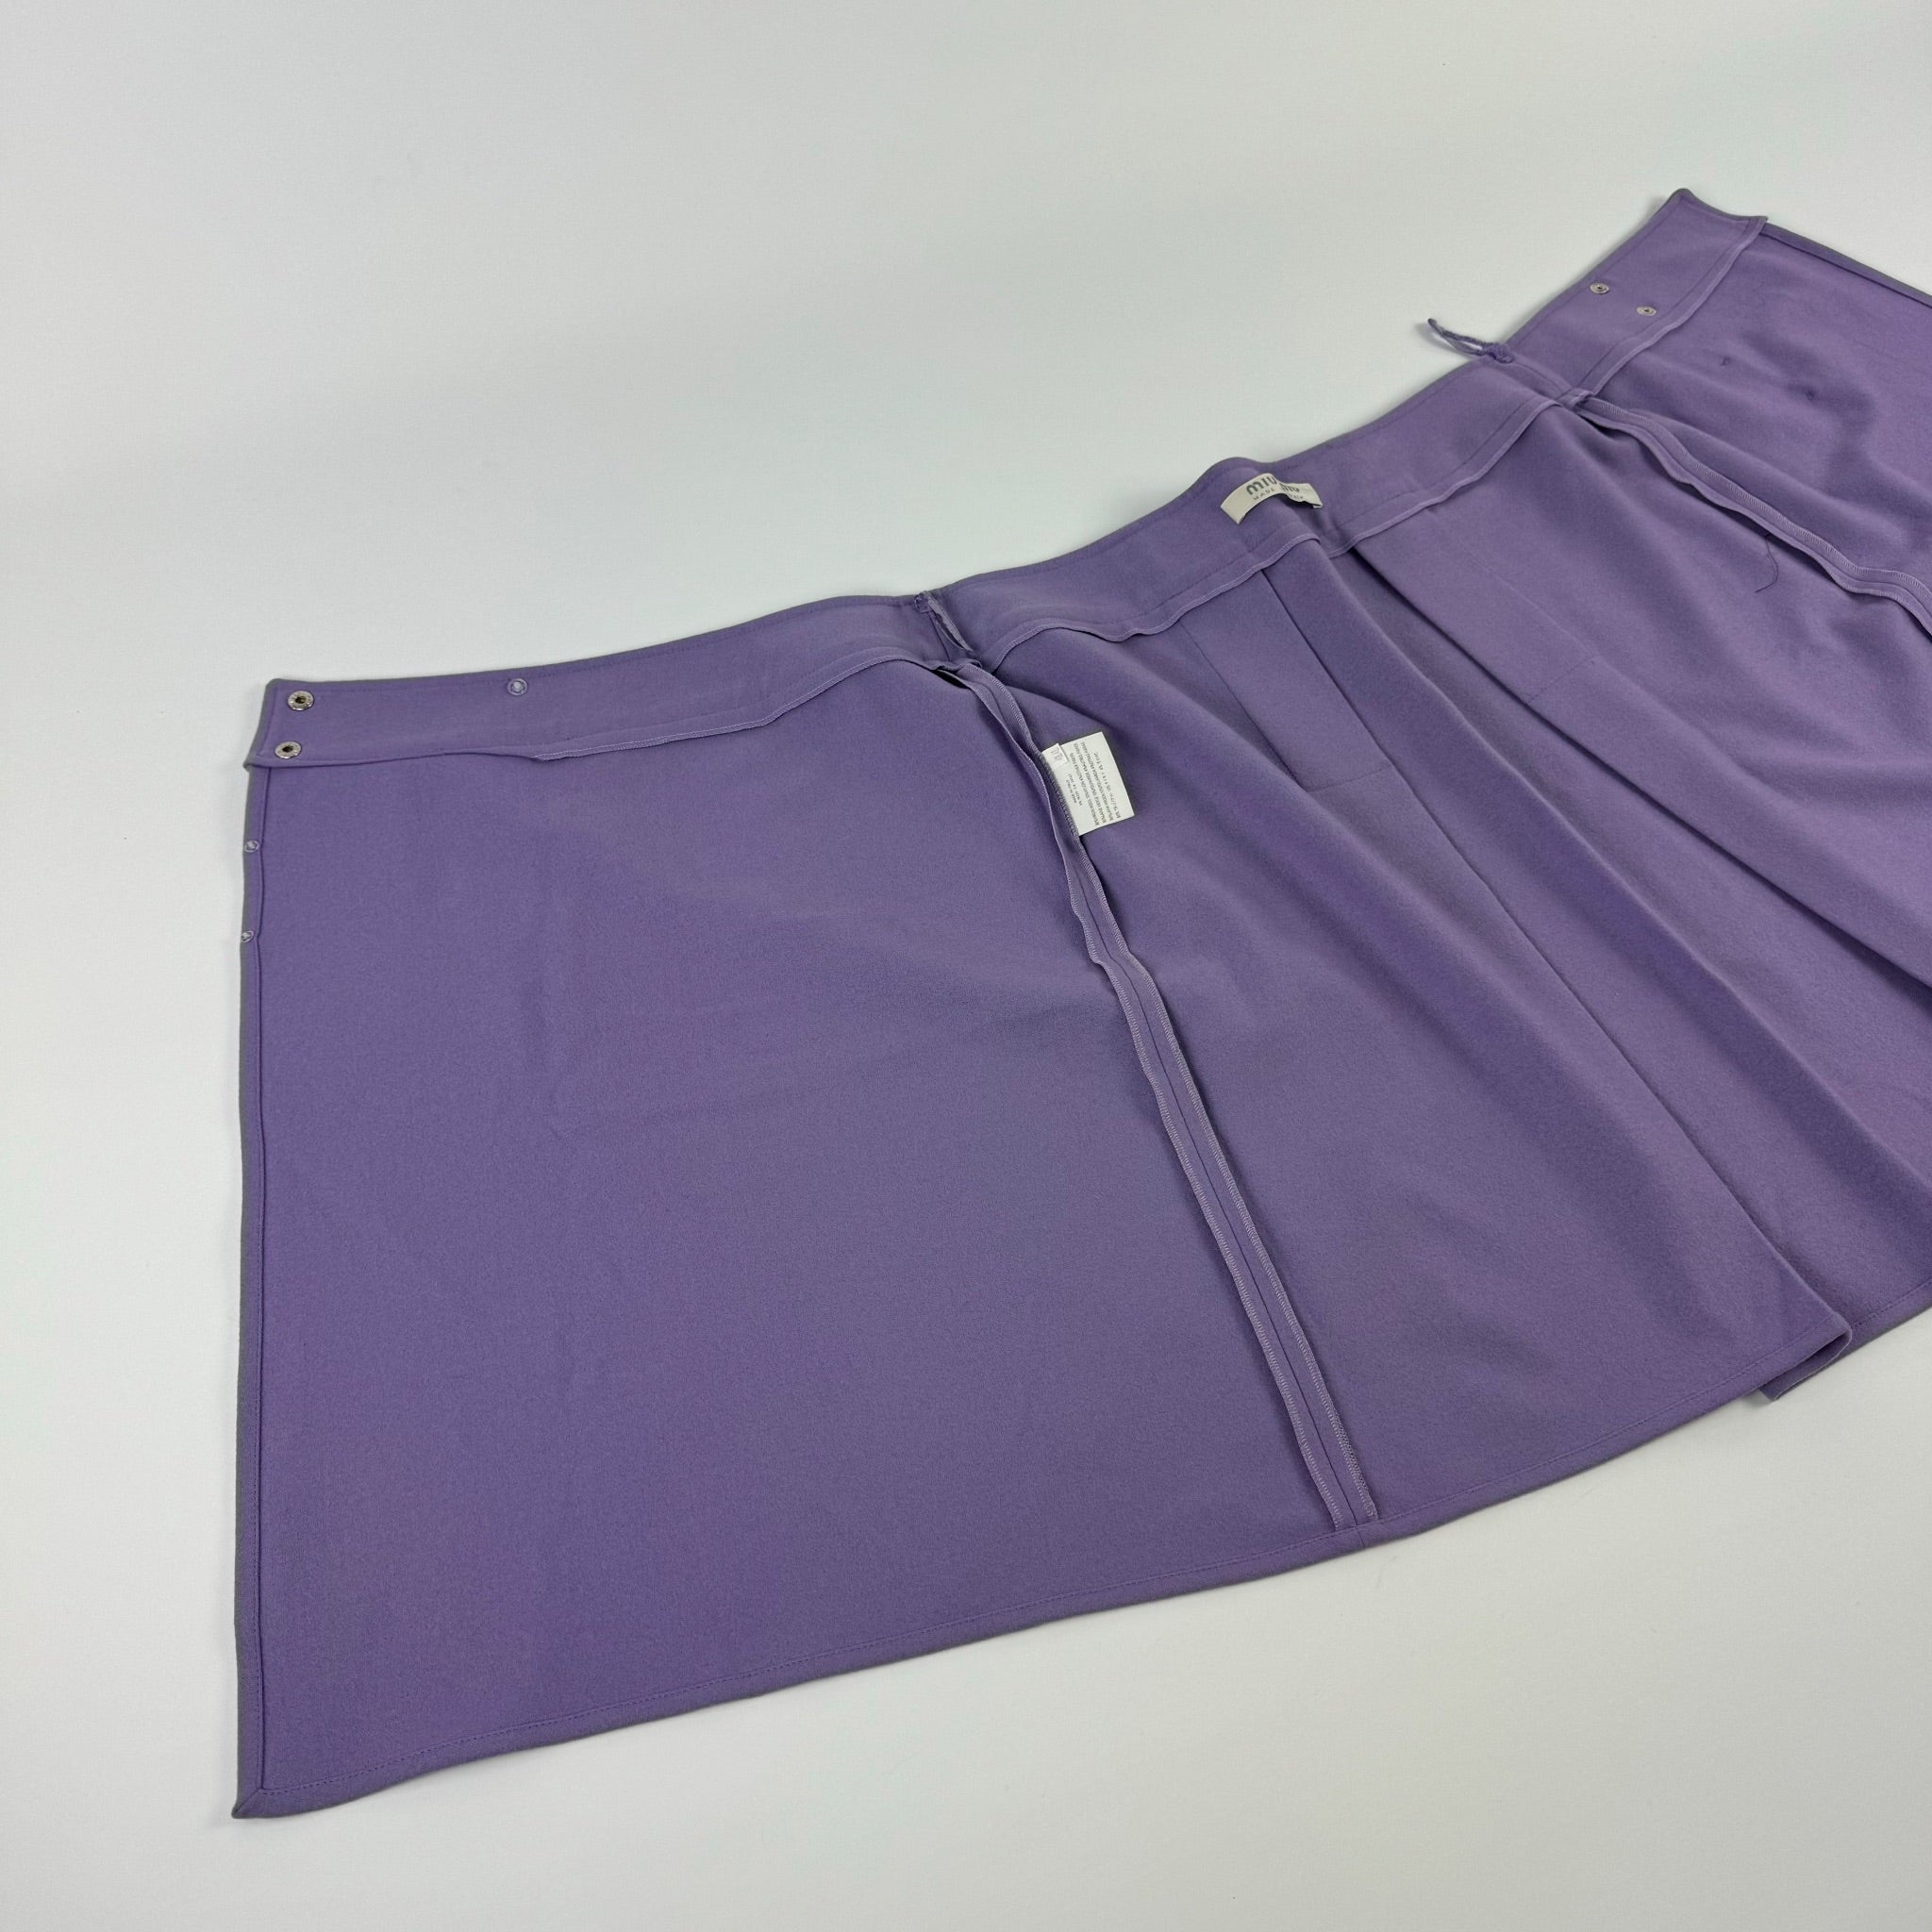 Miu Miu Lavender Wrap-Skirt, 1996 - 3